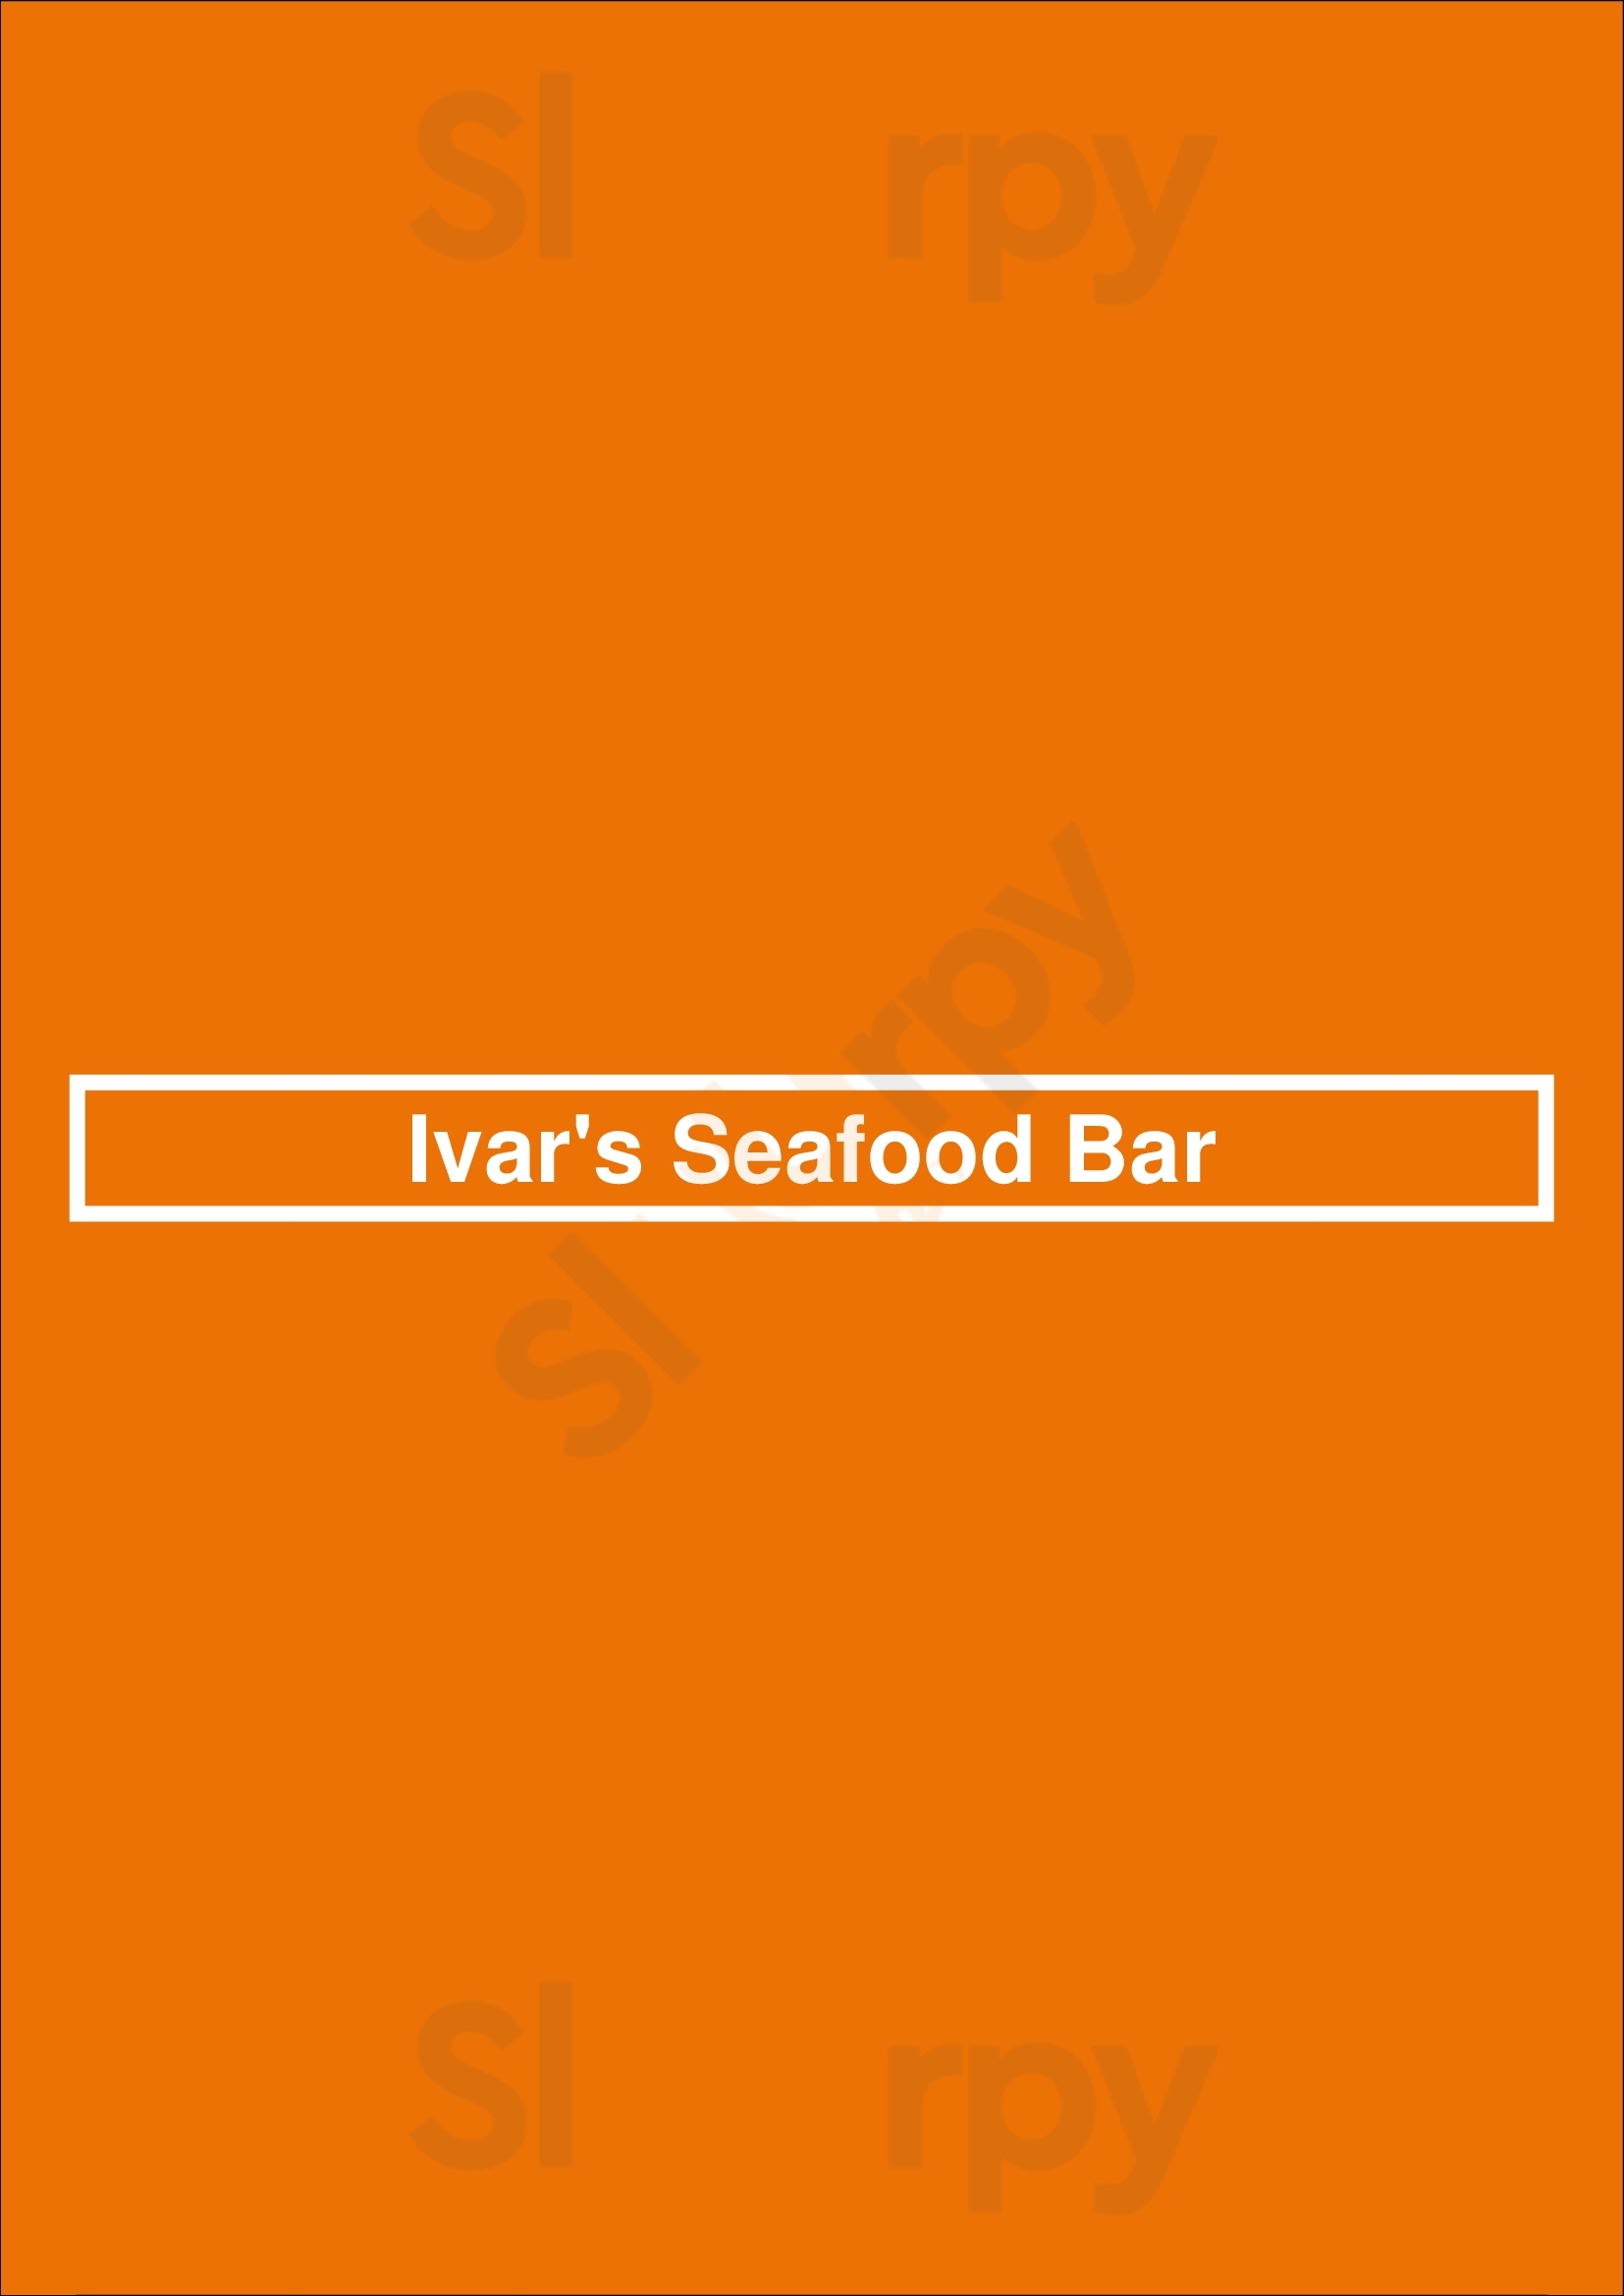 Ivar's Seafood Bar Seattle Menu - 1